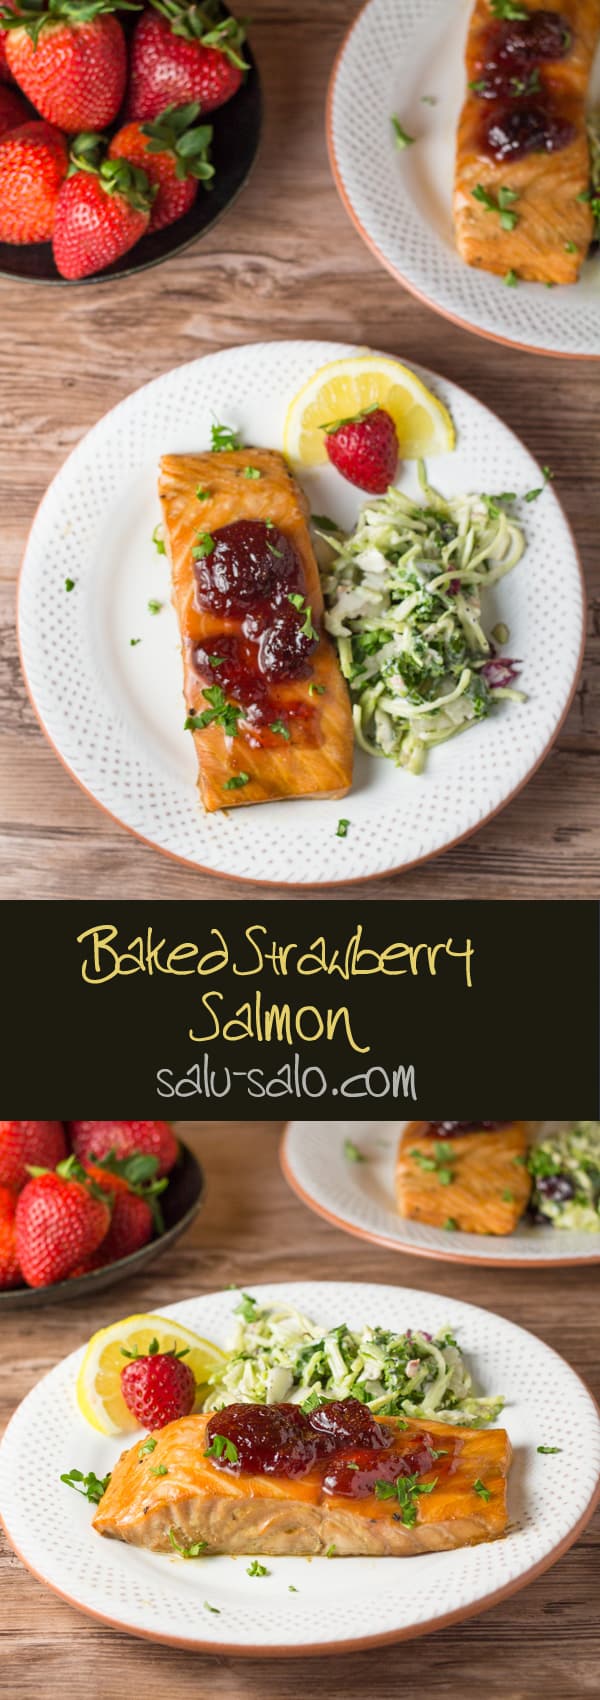 Baked Strawberry Salmon